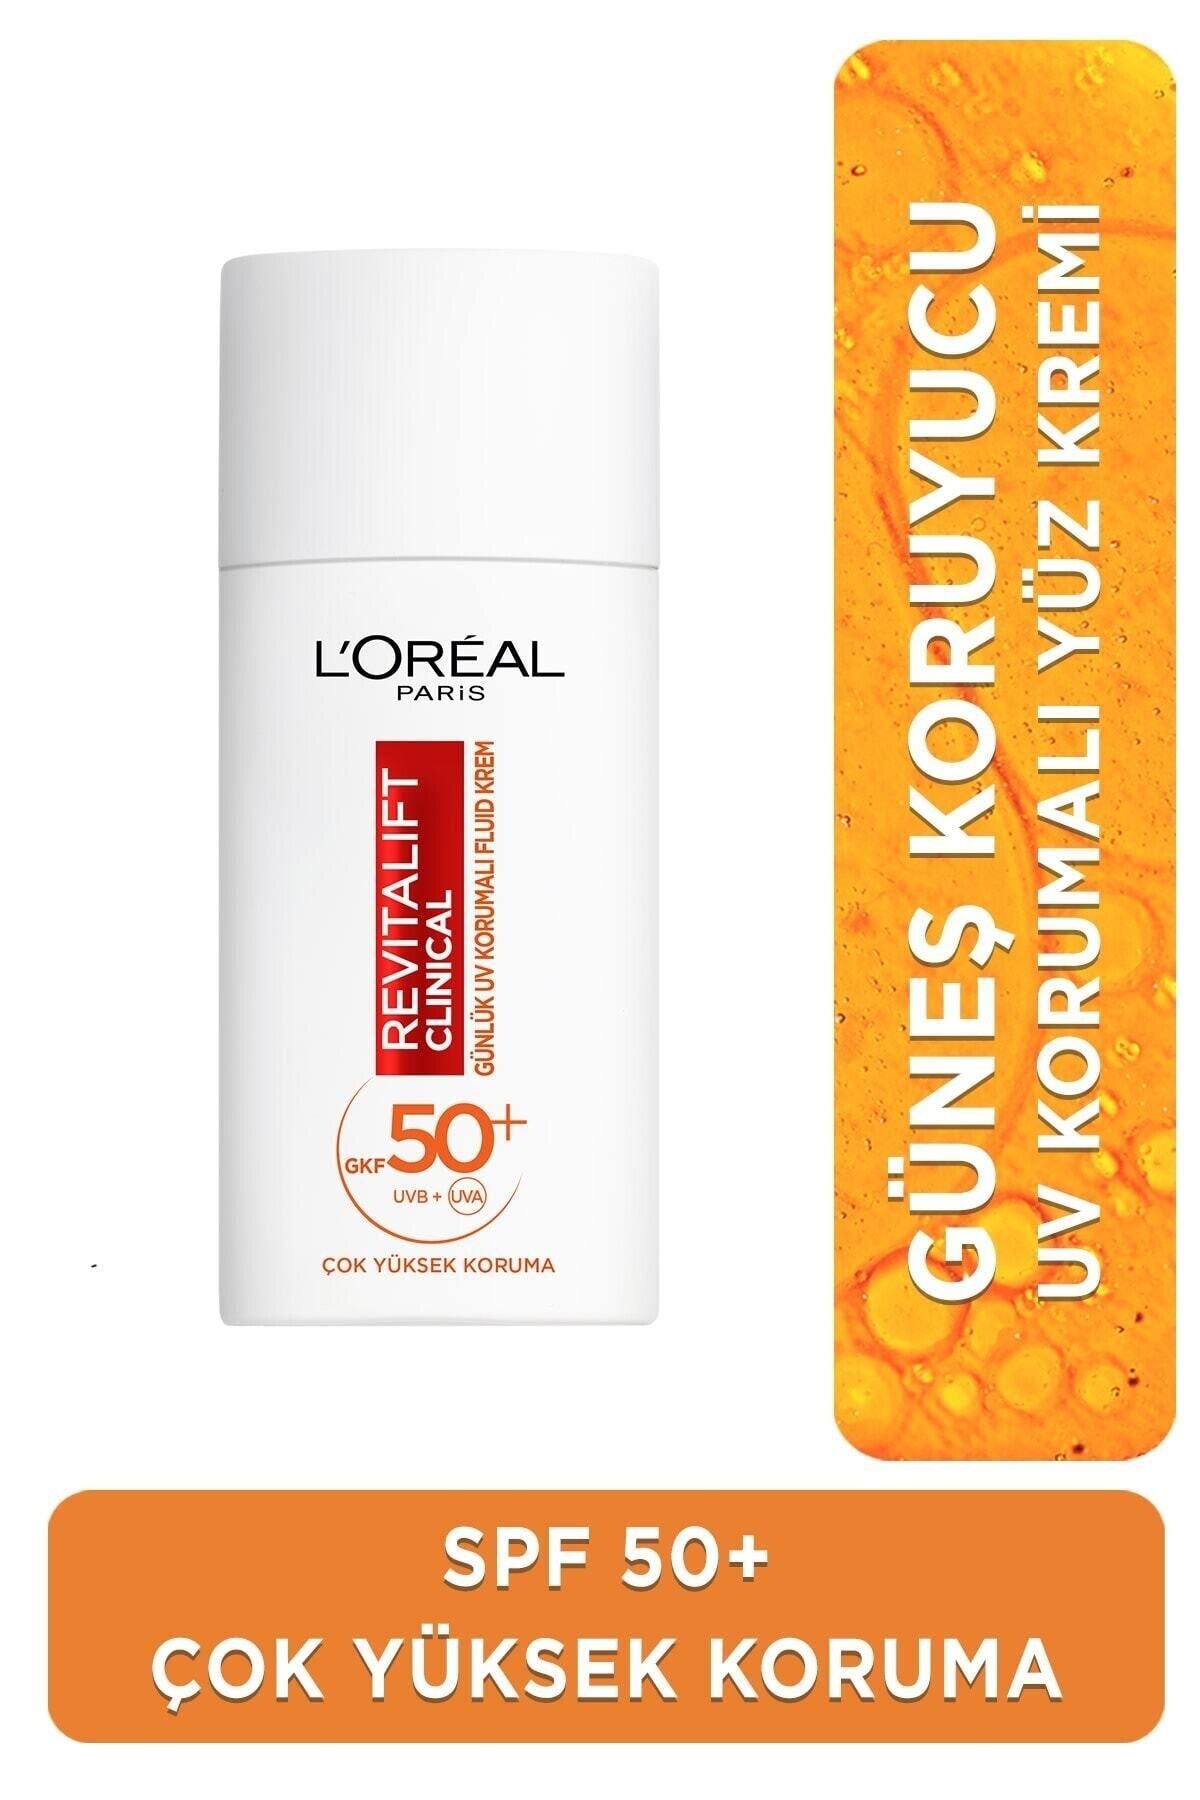 L'Oreal Paris Daily High UV Protection Revitalift Clinical Spf 50+ Facial Sunscreen 50 /ml GKÜrün696